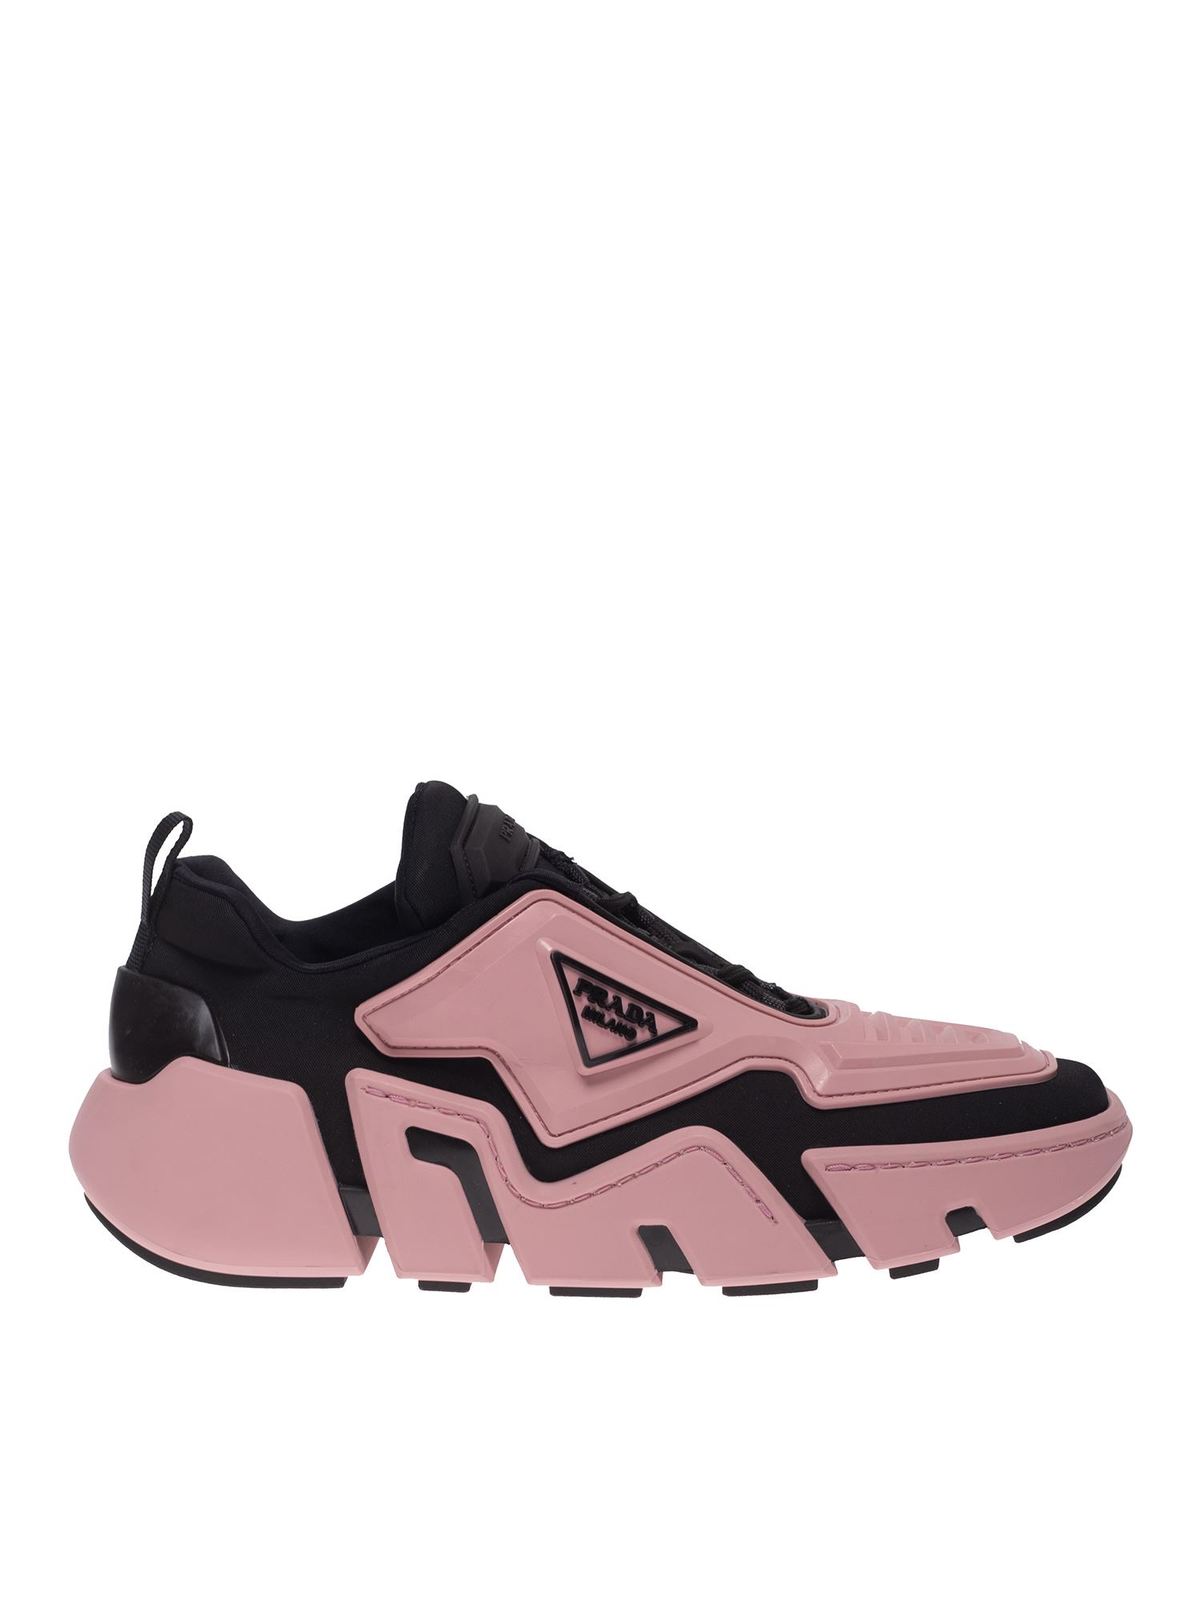 prada trainers pink